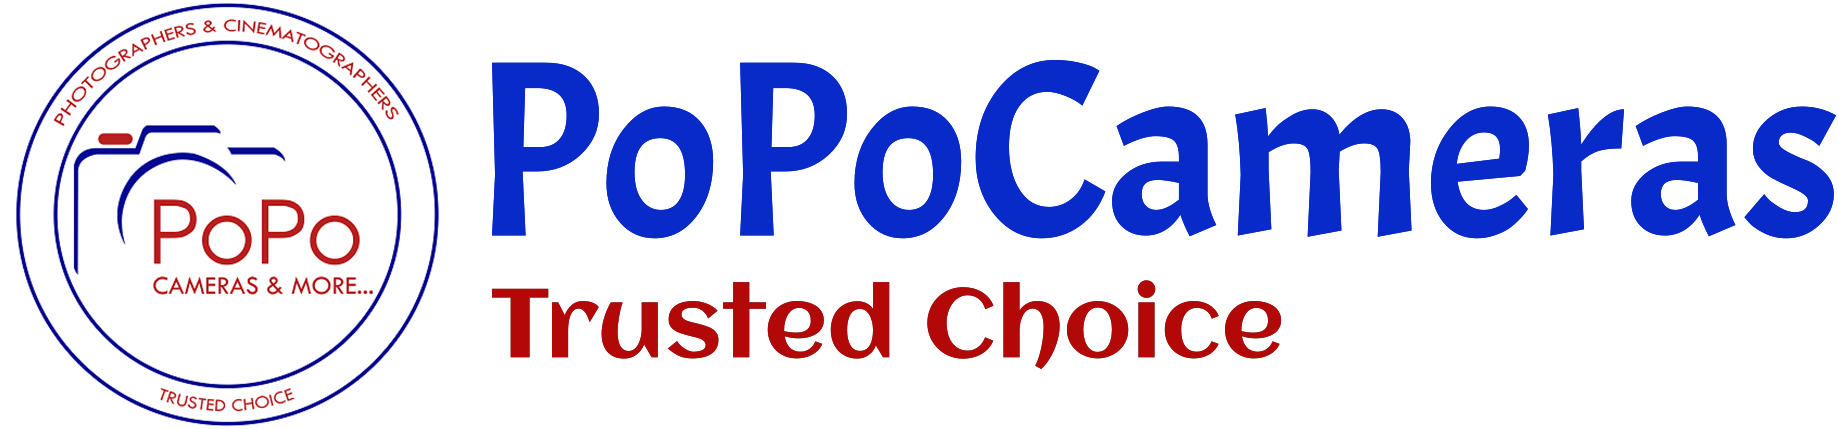 Popocameras - Trusted Choice